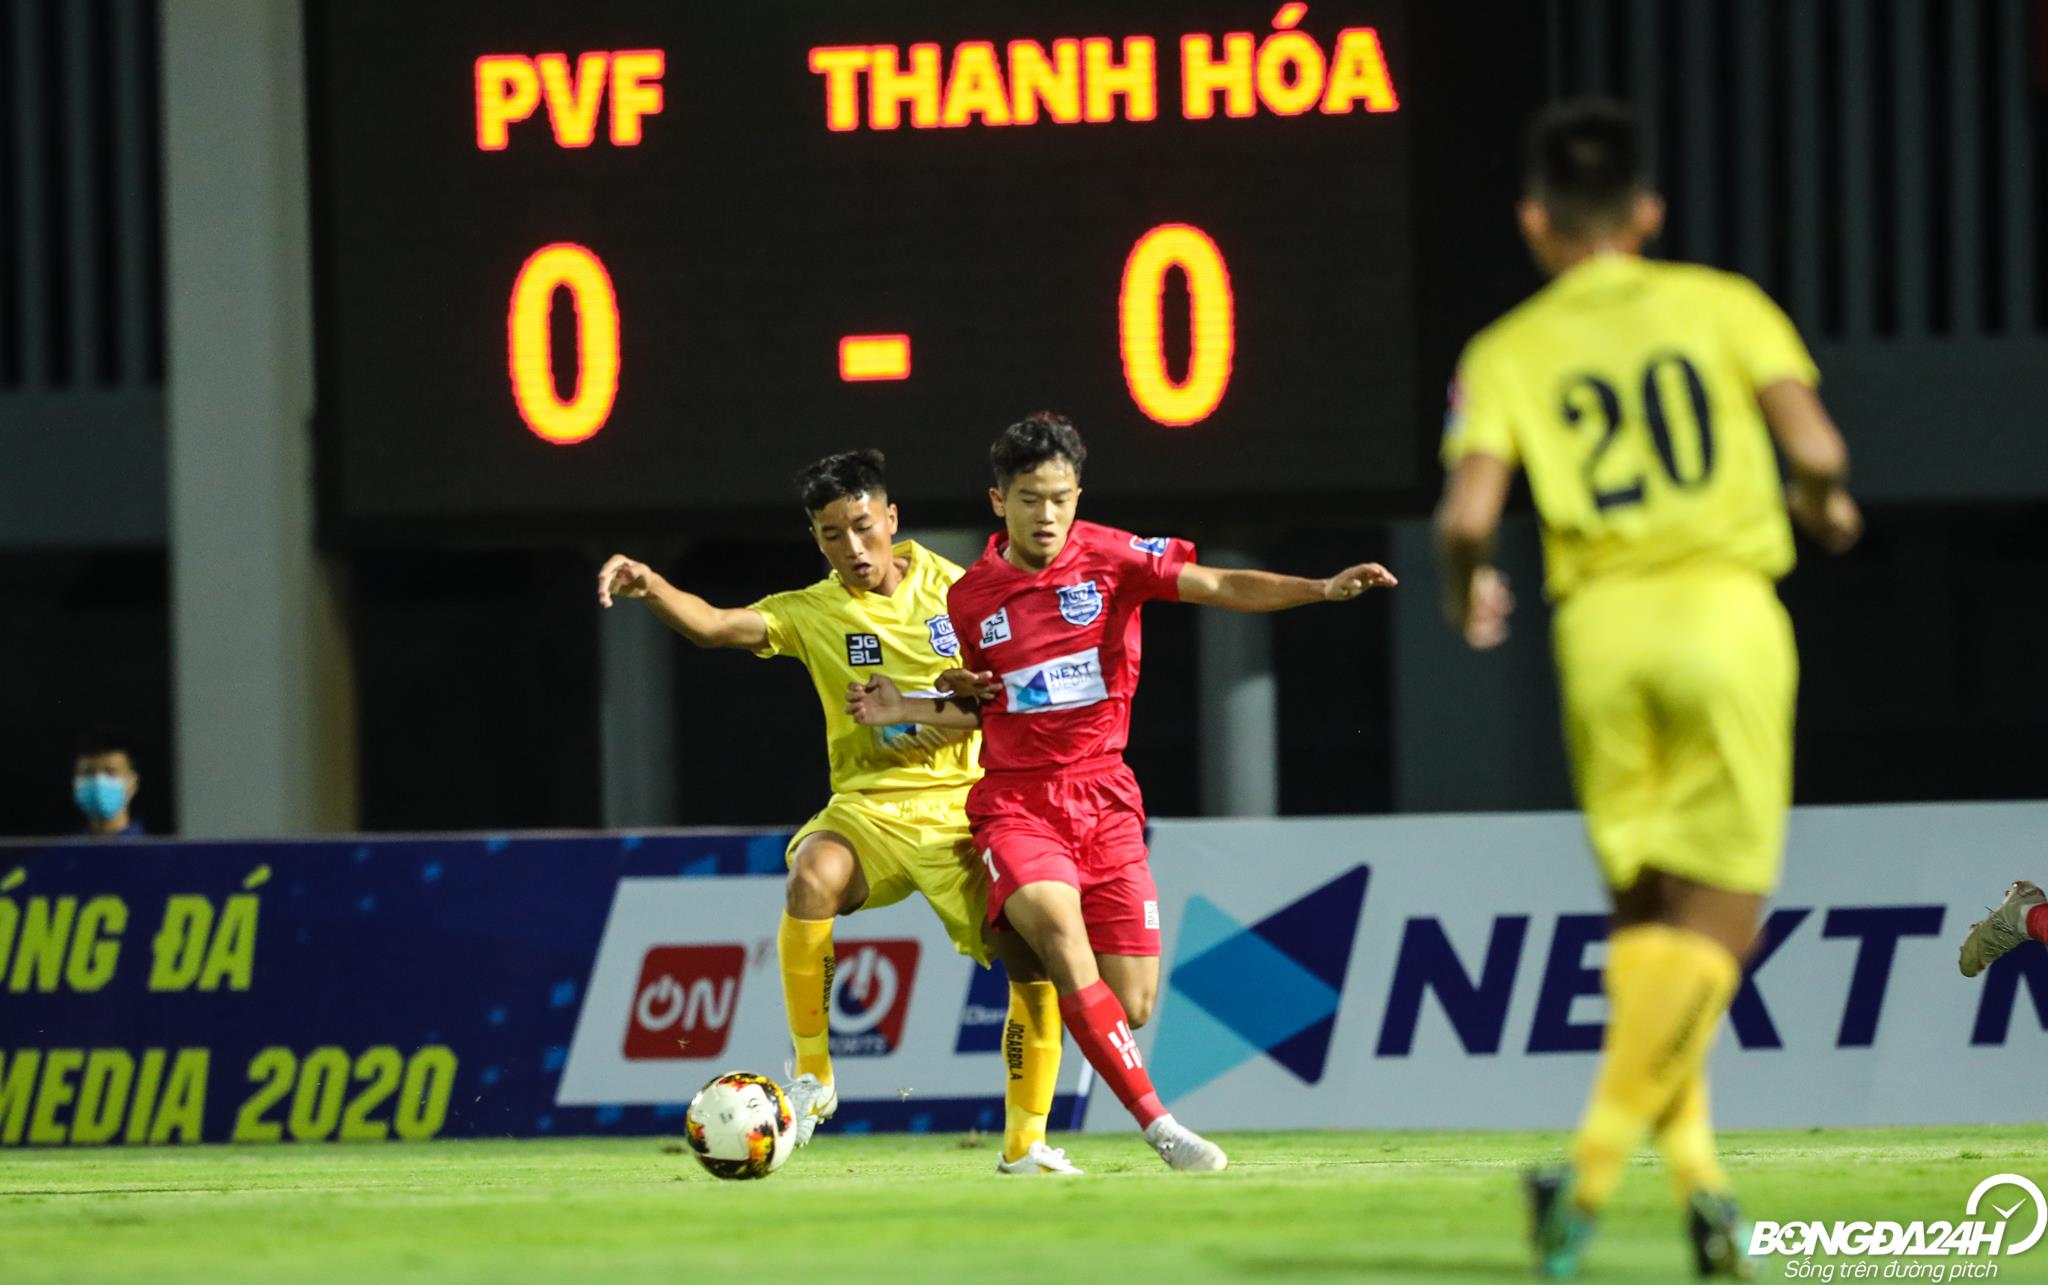 U17 PVF vs U17 Thanh Hoa